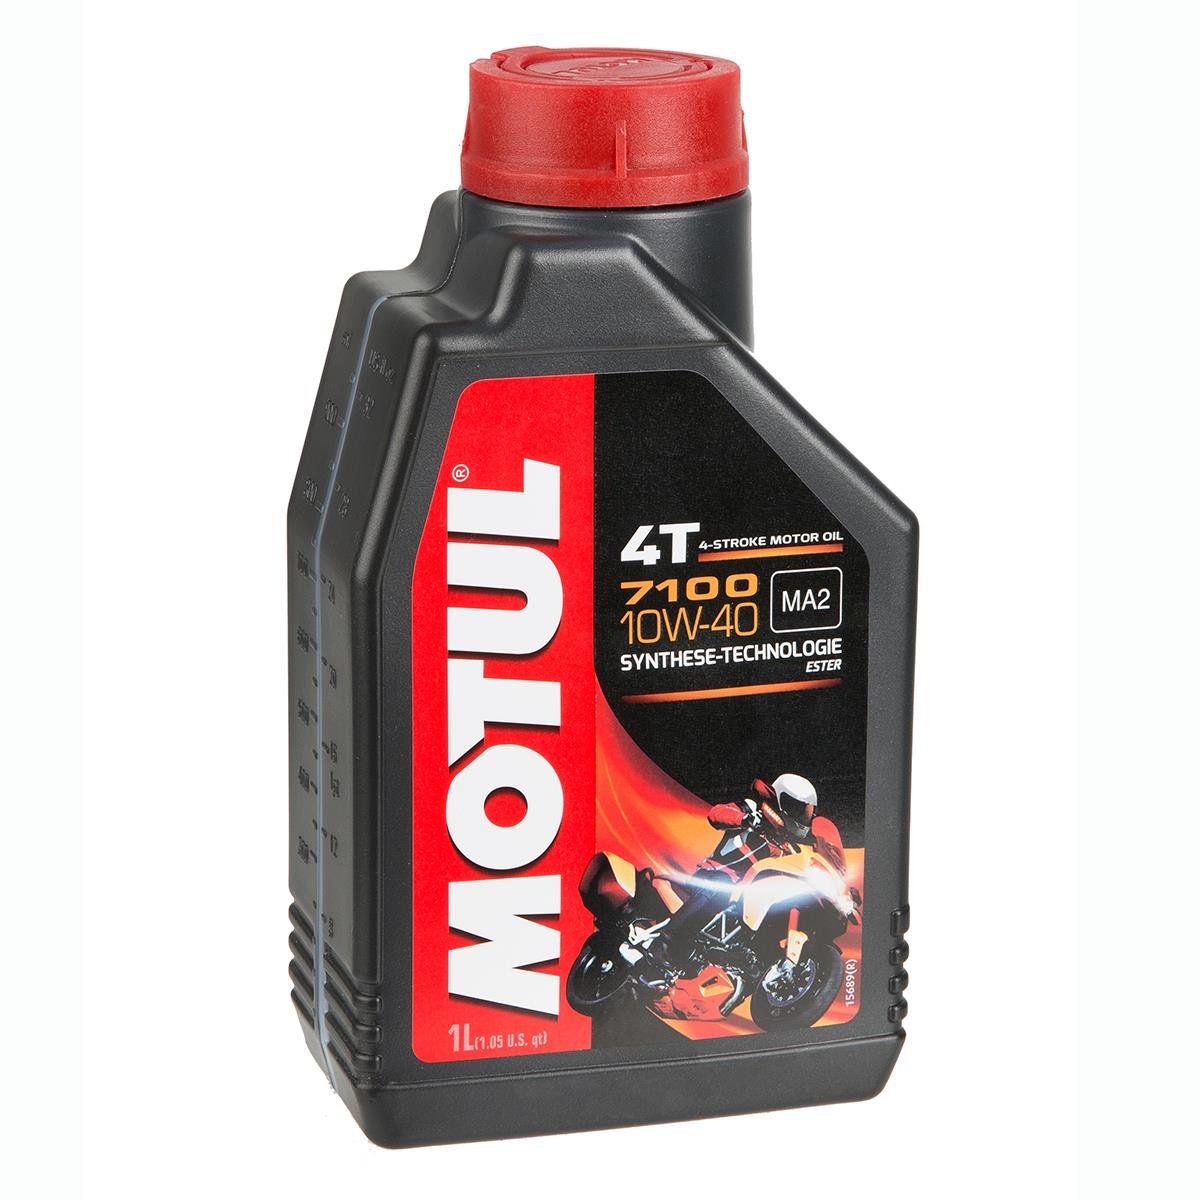 Aceite Moto 4T MOTUL 7100 10W40 4T 60L